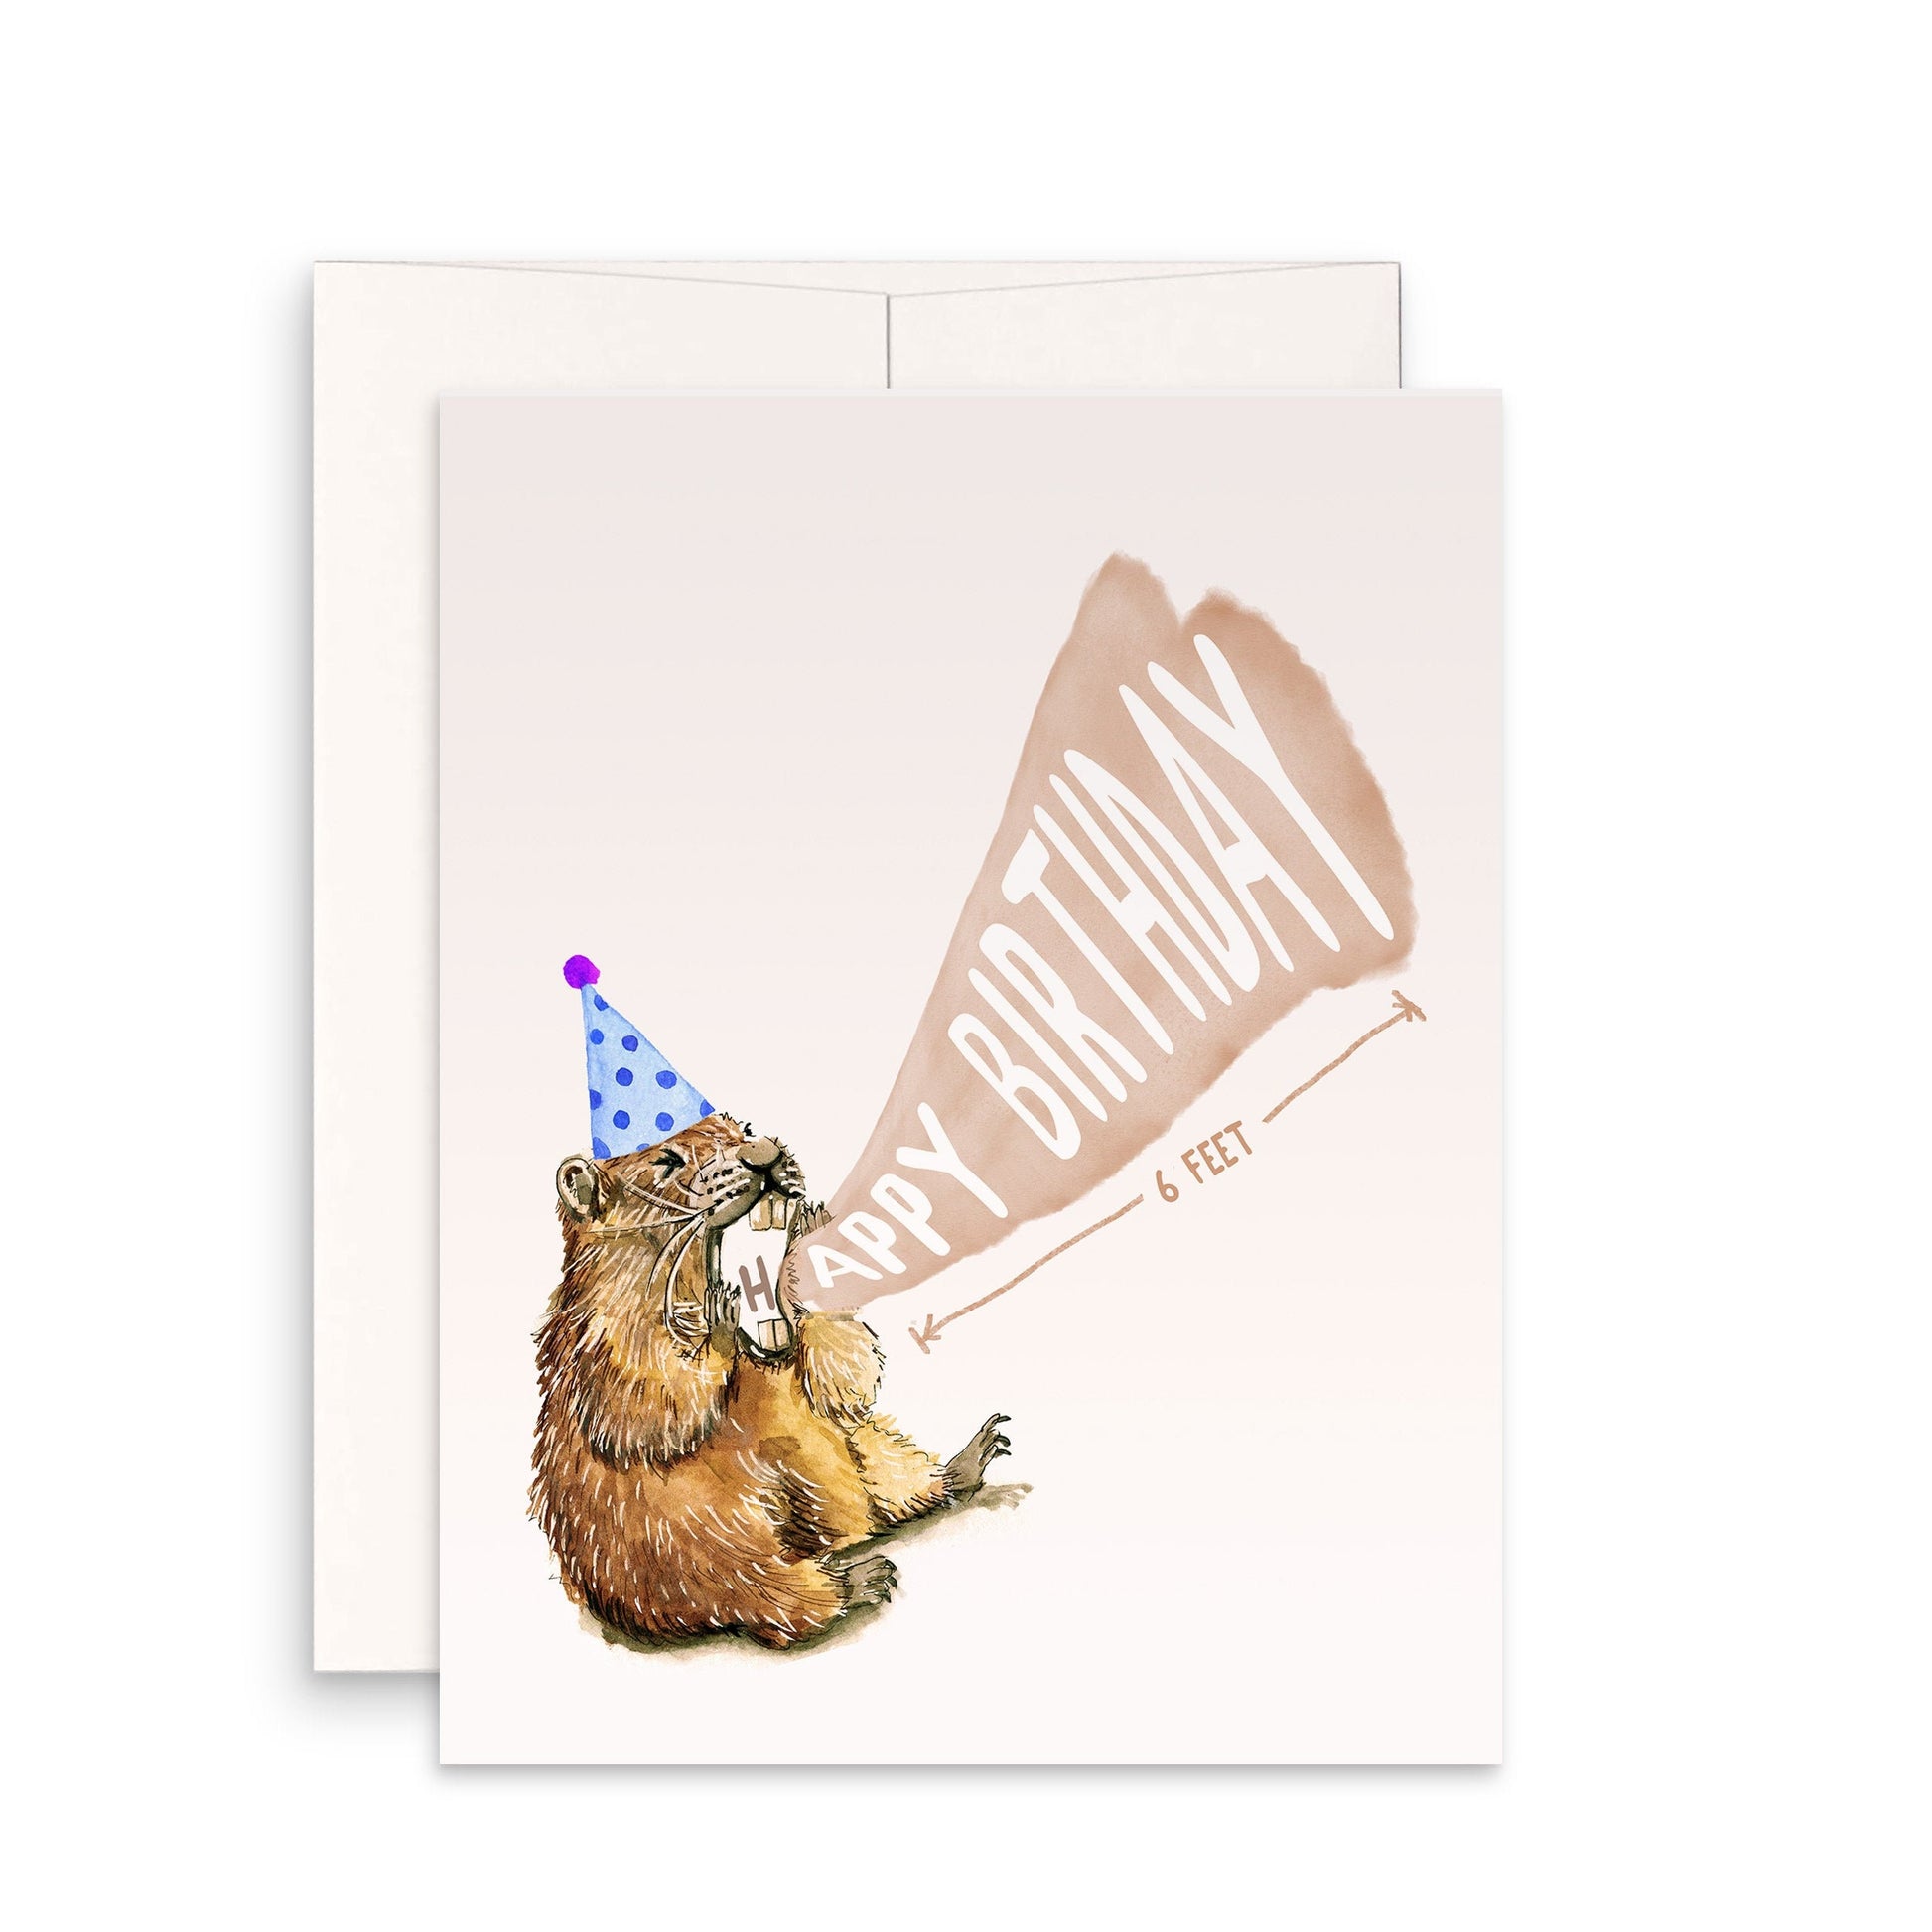 Quarantine Birthday Card For Him - Screaming Mermot Social Distancing 6 Feet Away